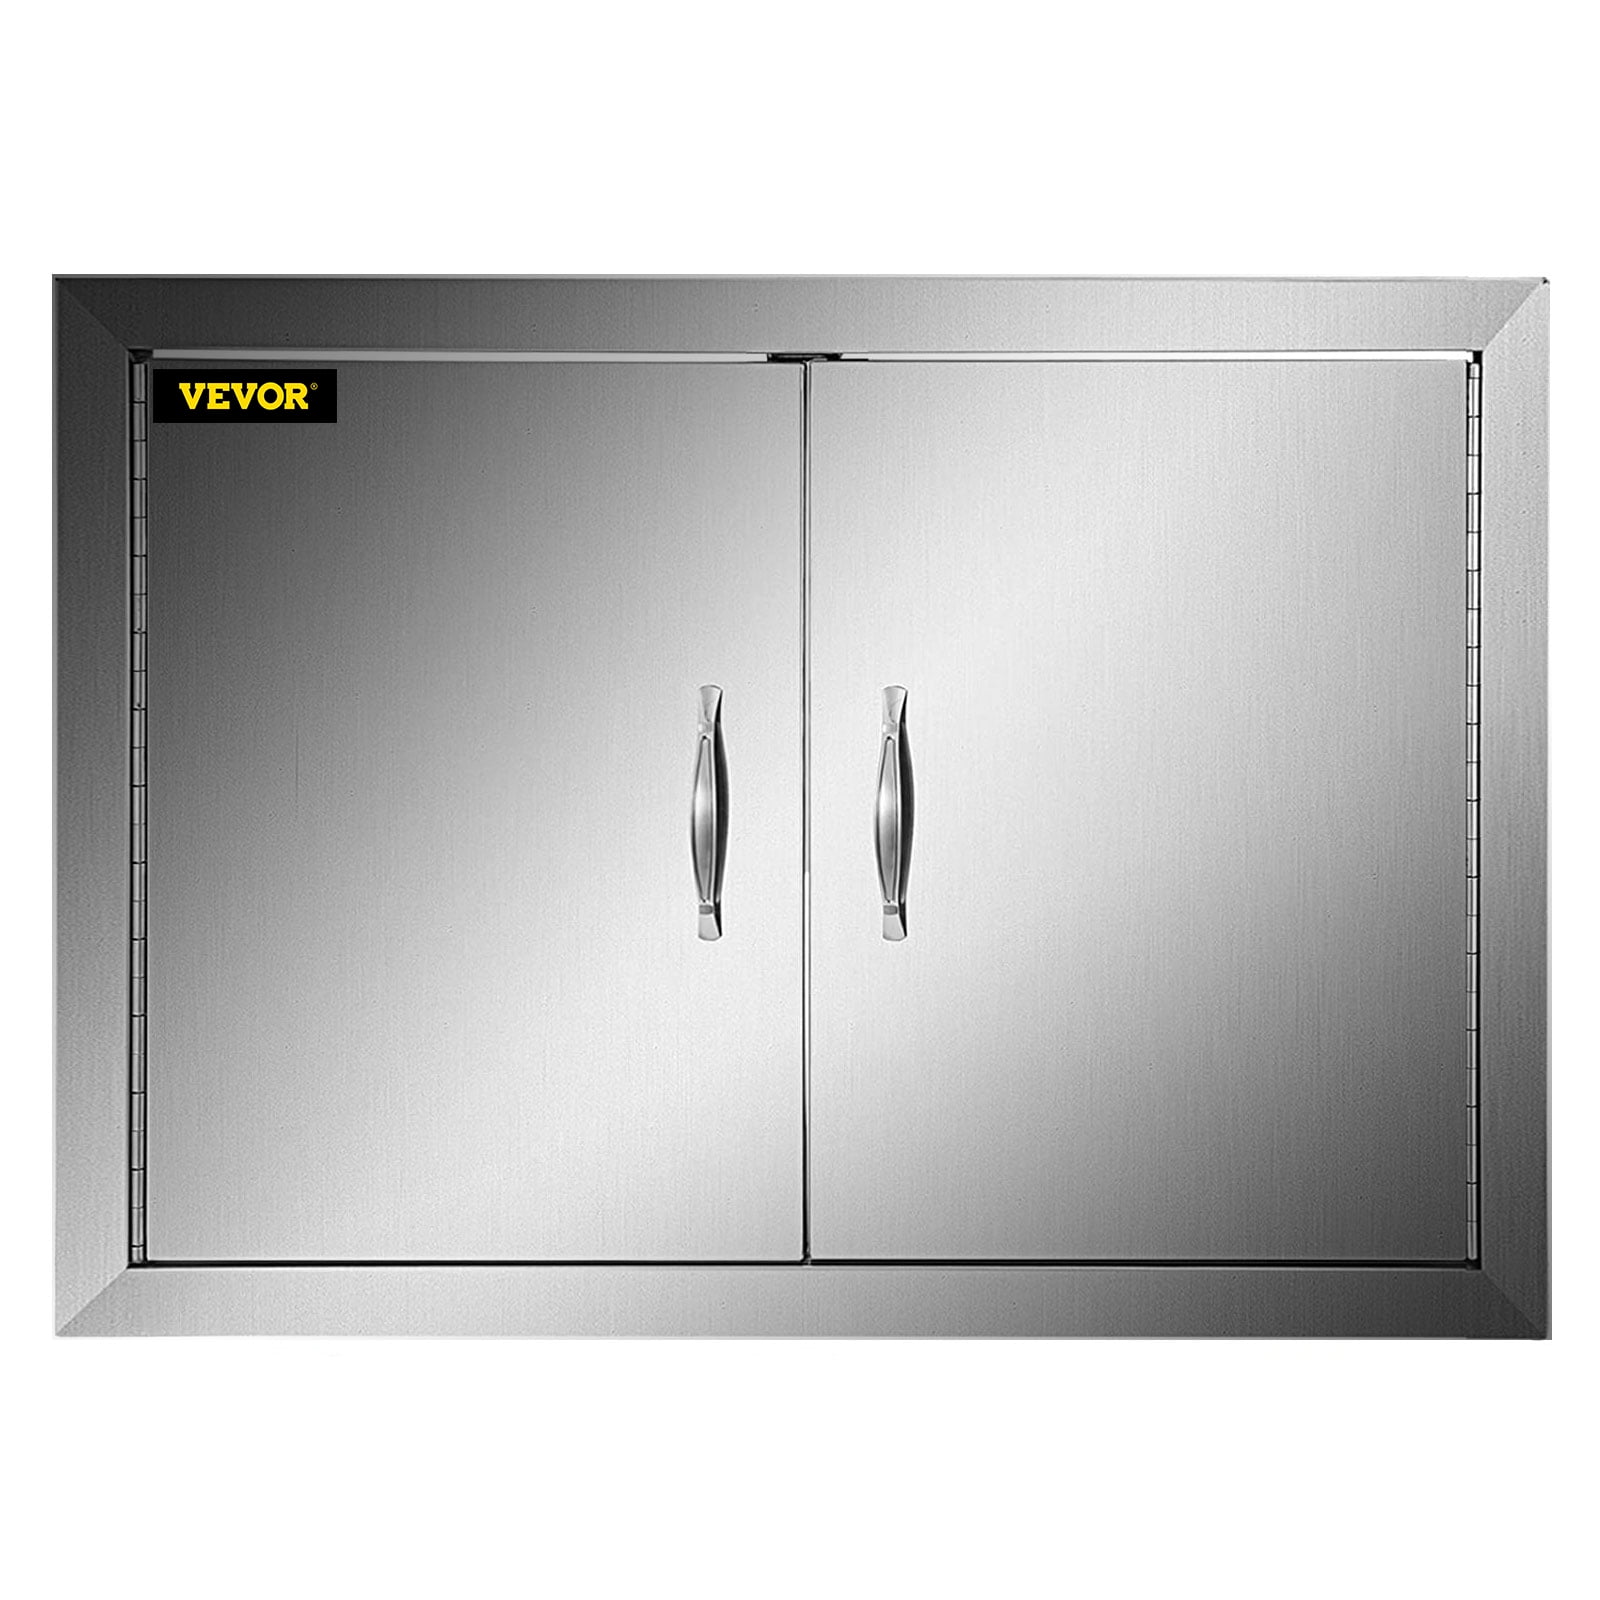 Details about   Stainless Steel BBQ Double Door Drawer Access Outdoor Kitchen Door 28-31 inch 